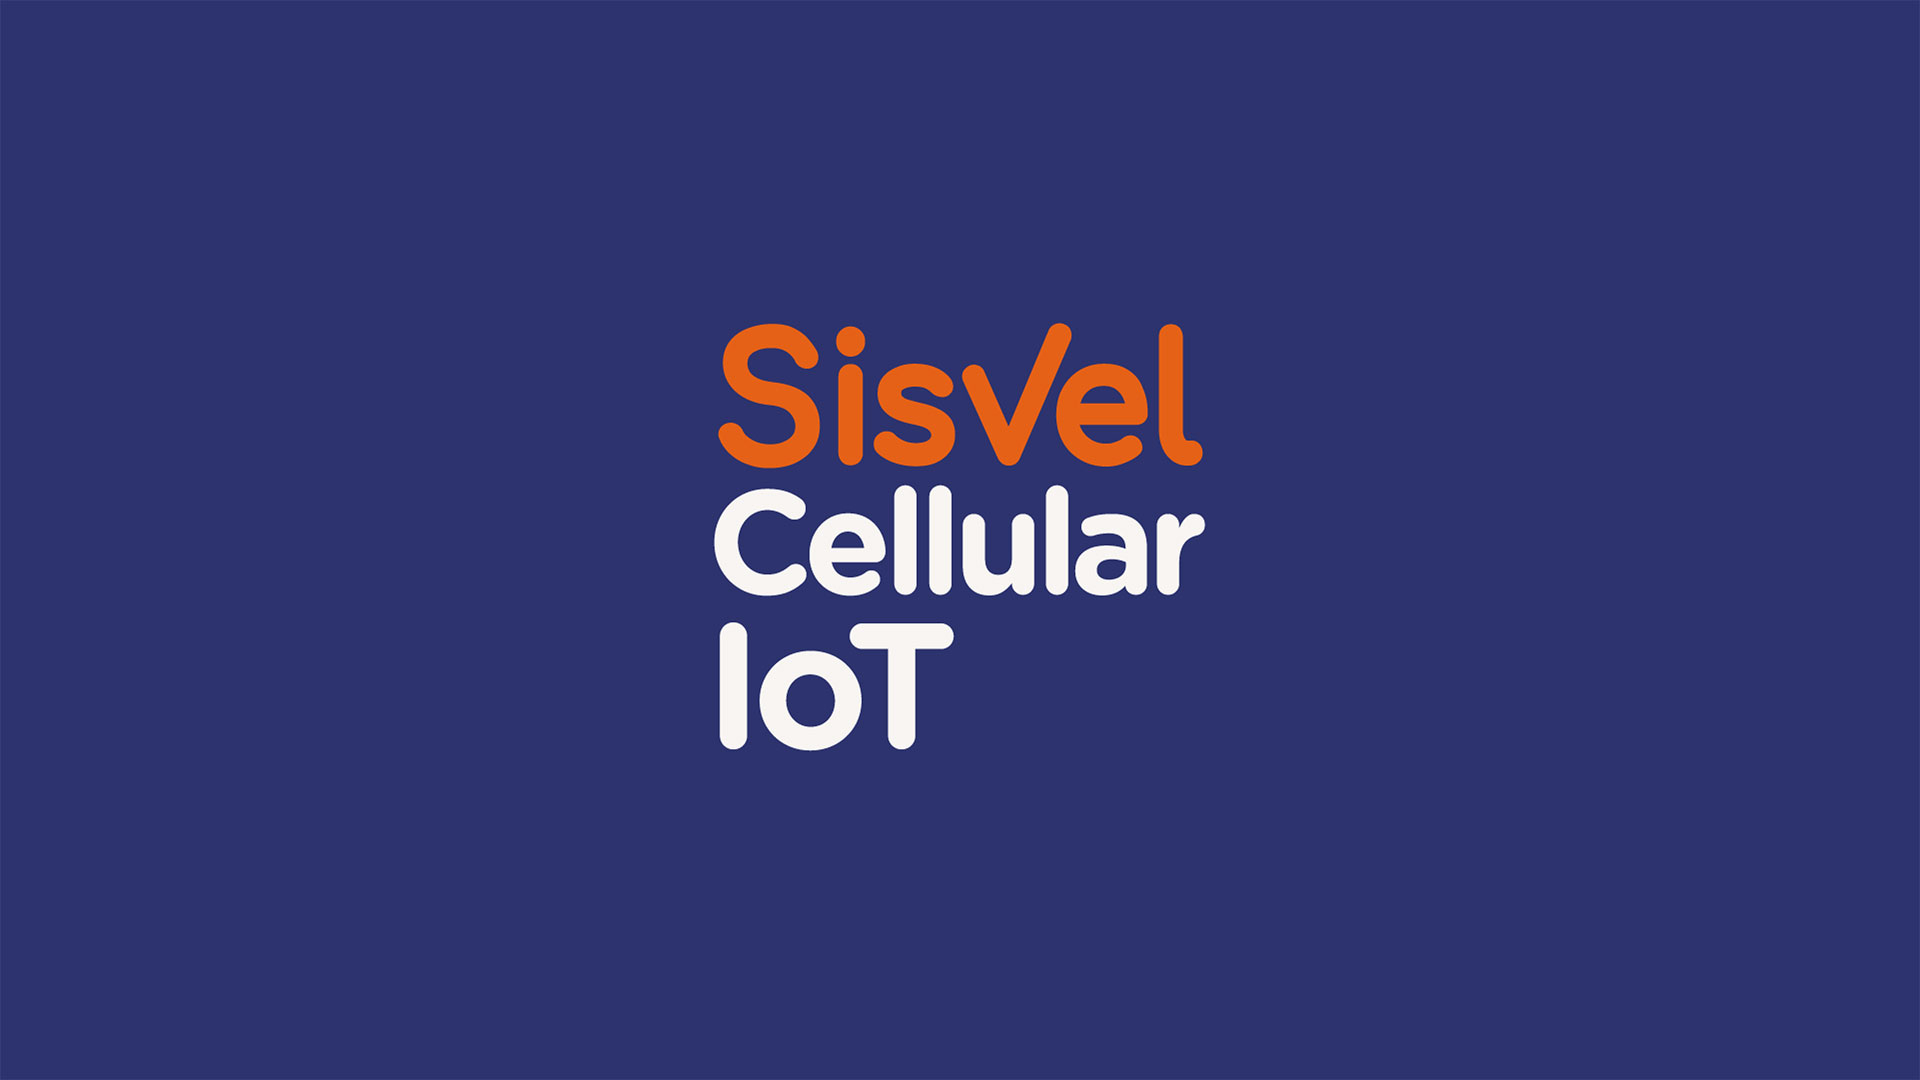 Sisvel Cellular IoT campaign video - visit iotpatentpool.com for more information.